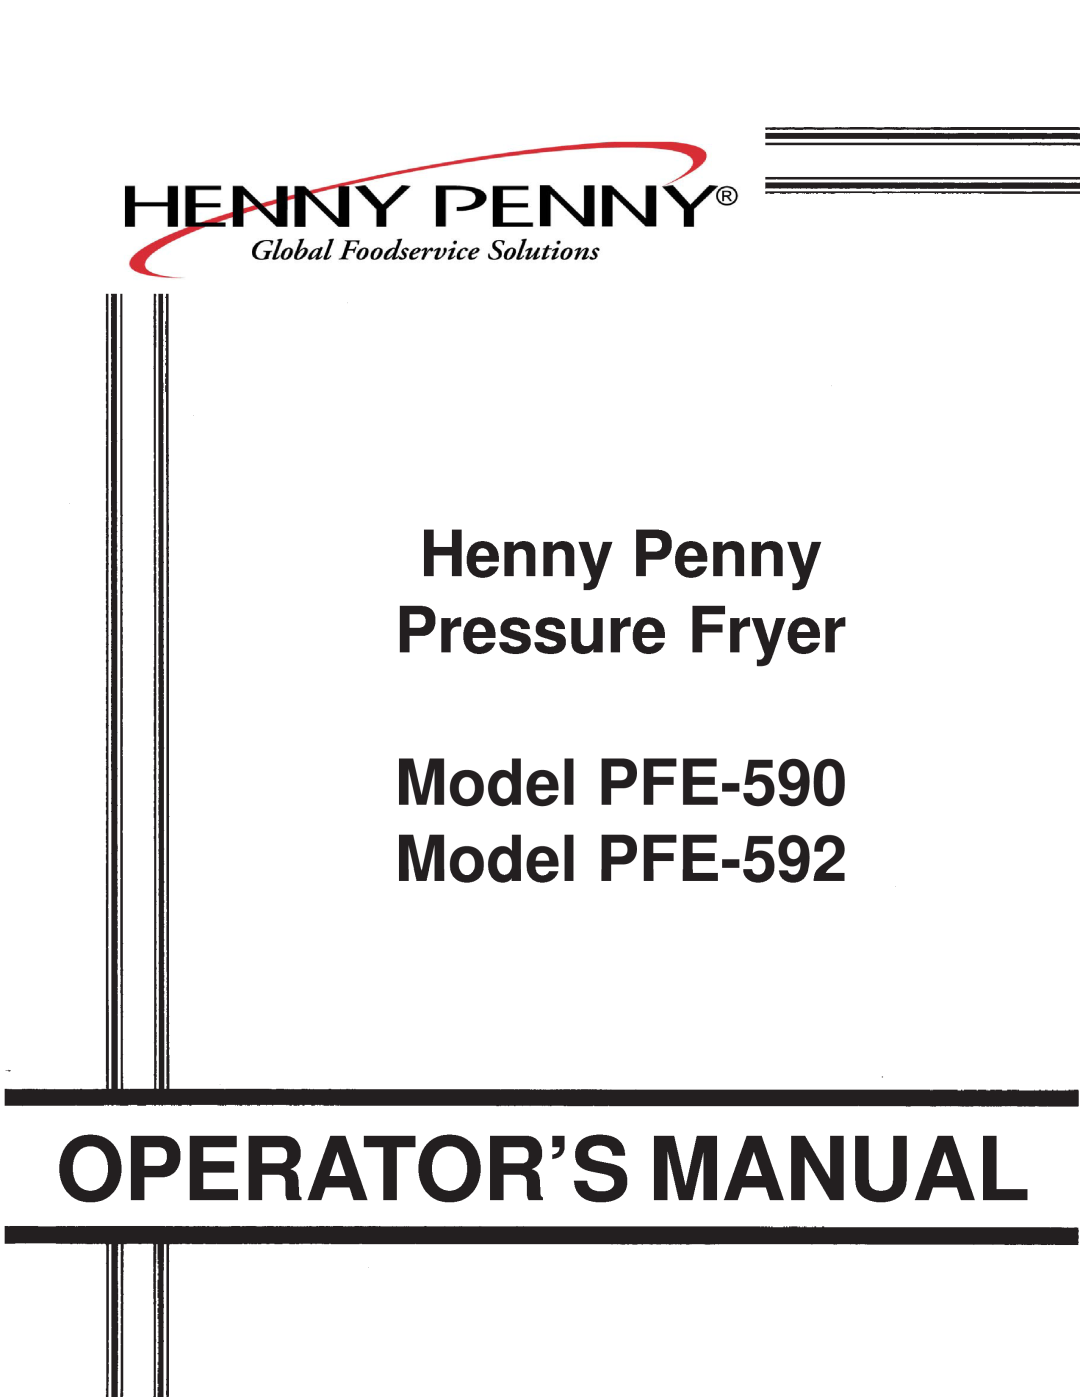 Henny Penny manual Operator’S Manual, Henny Penny Pressure Fryer Model PFE-590 Model PFE-592 